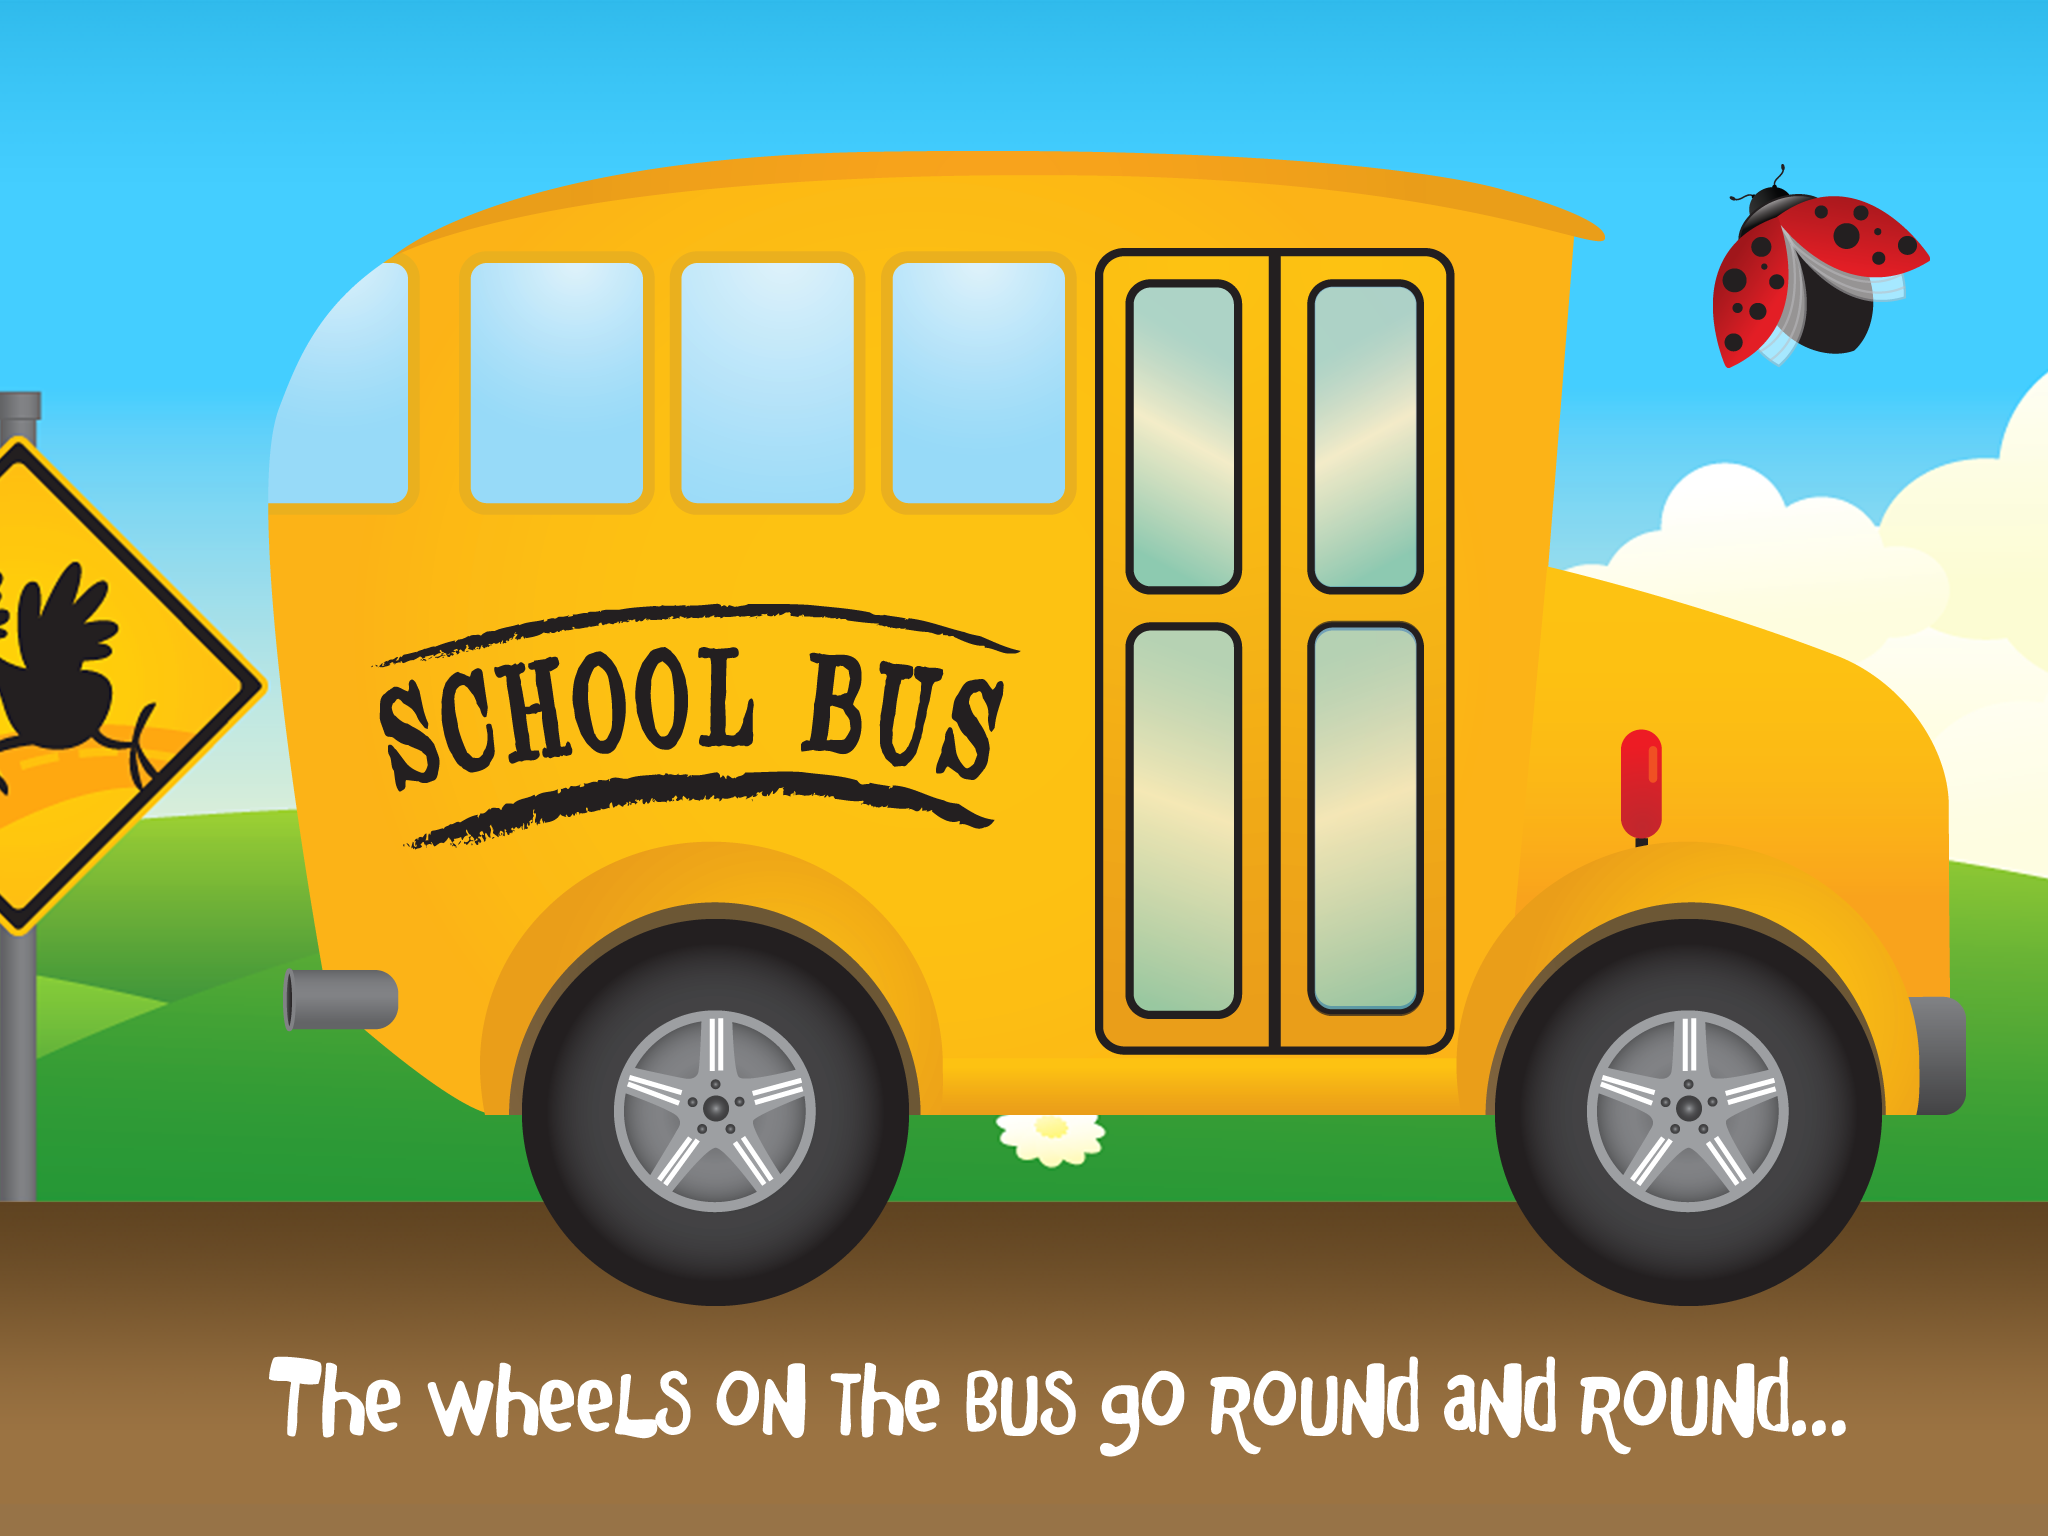 yellow school bus cartoon with School Bus written on the side